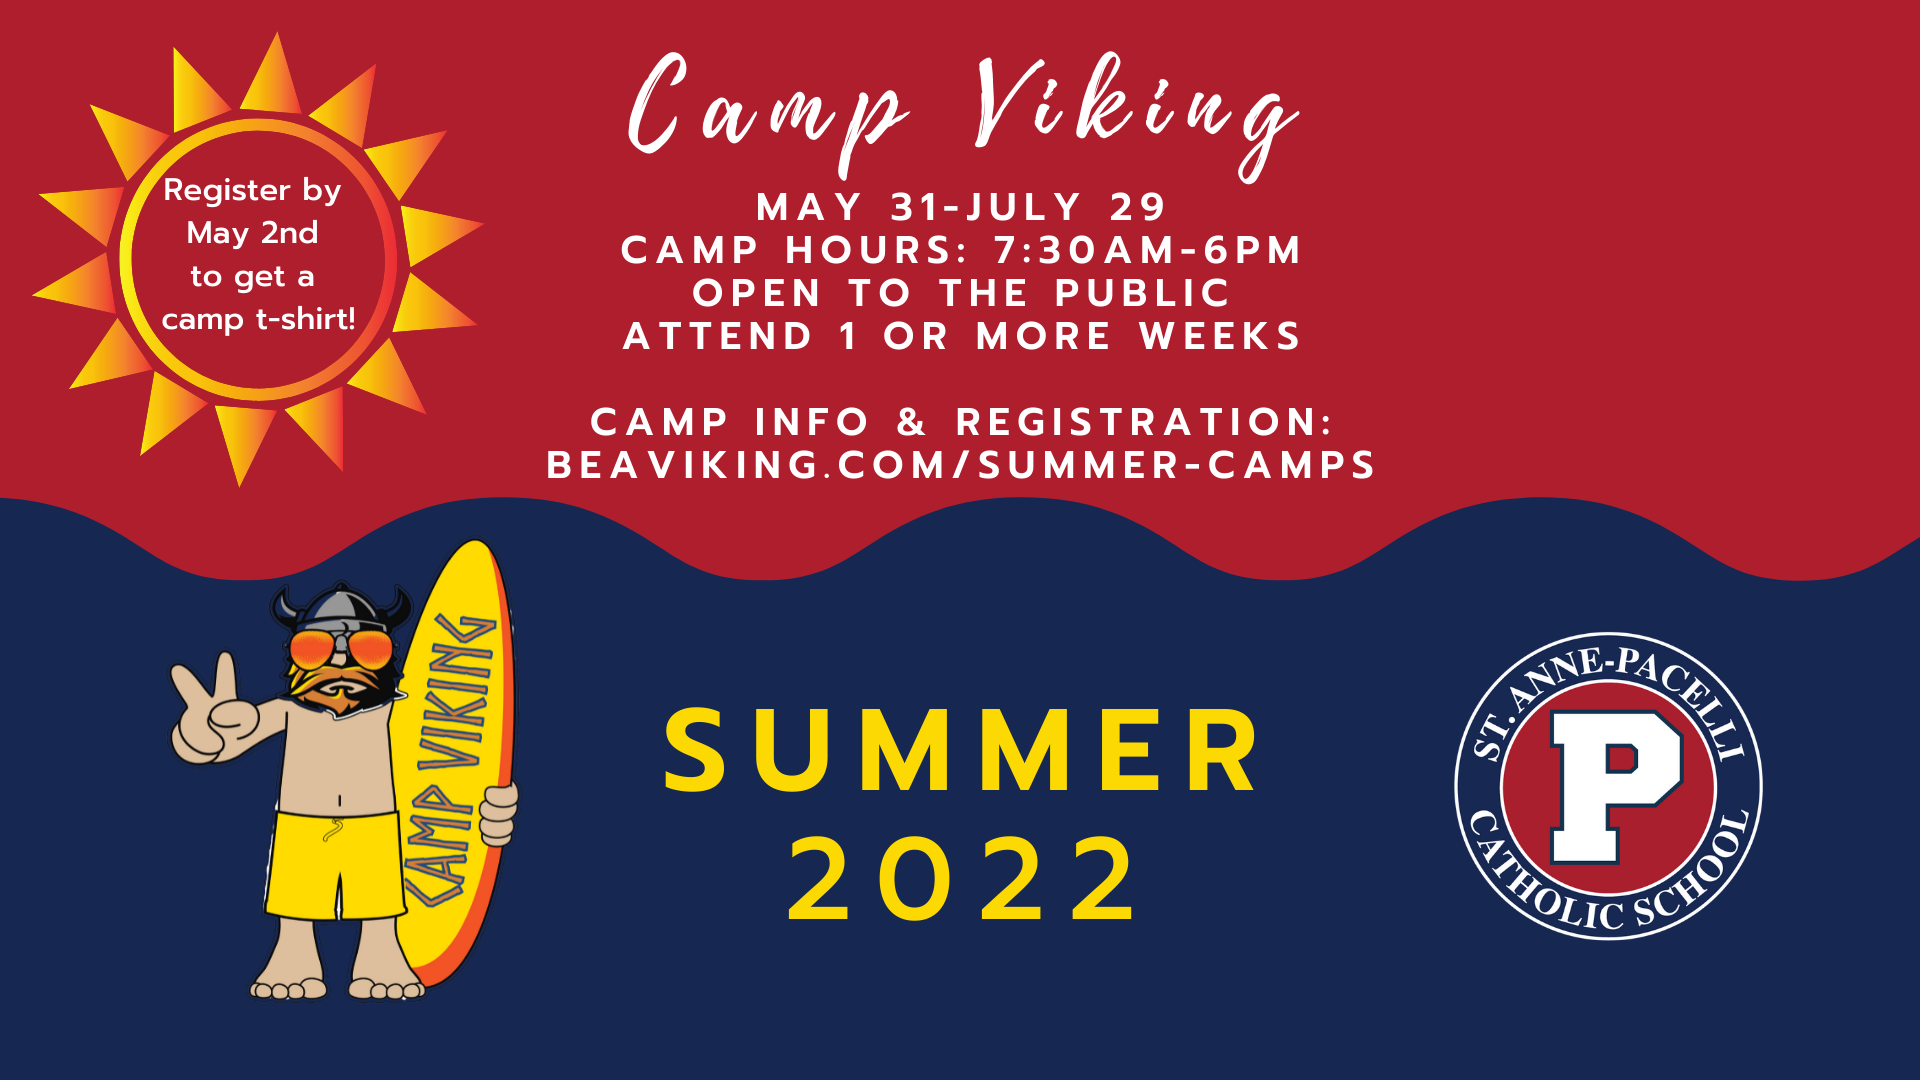 Camp Viking 2022